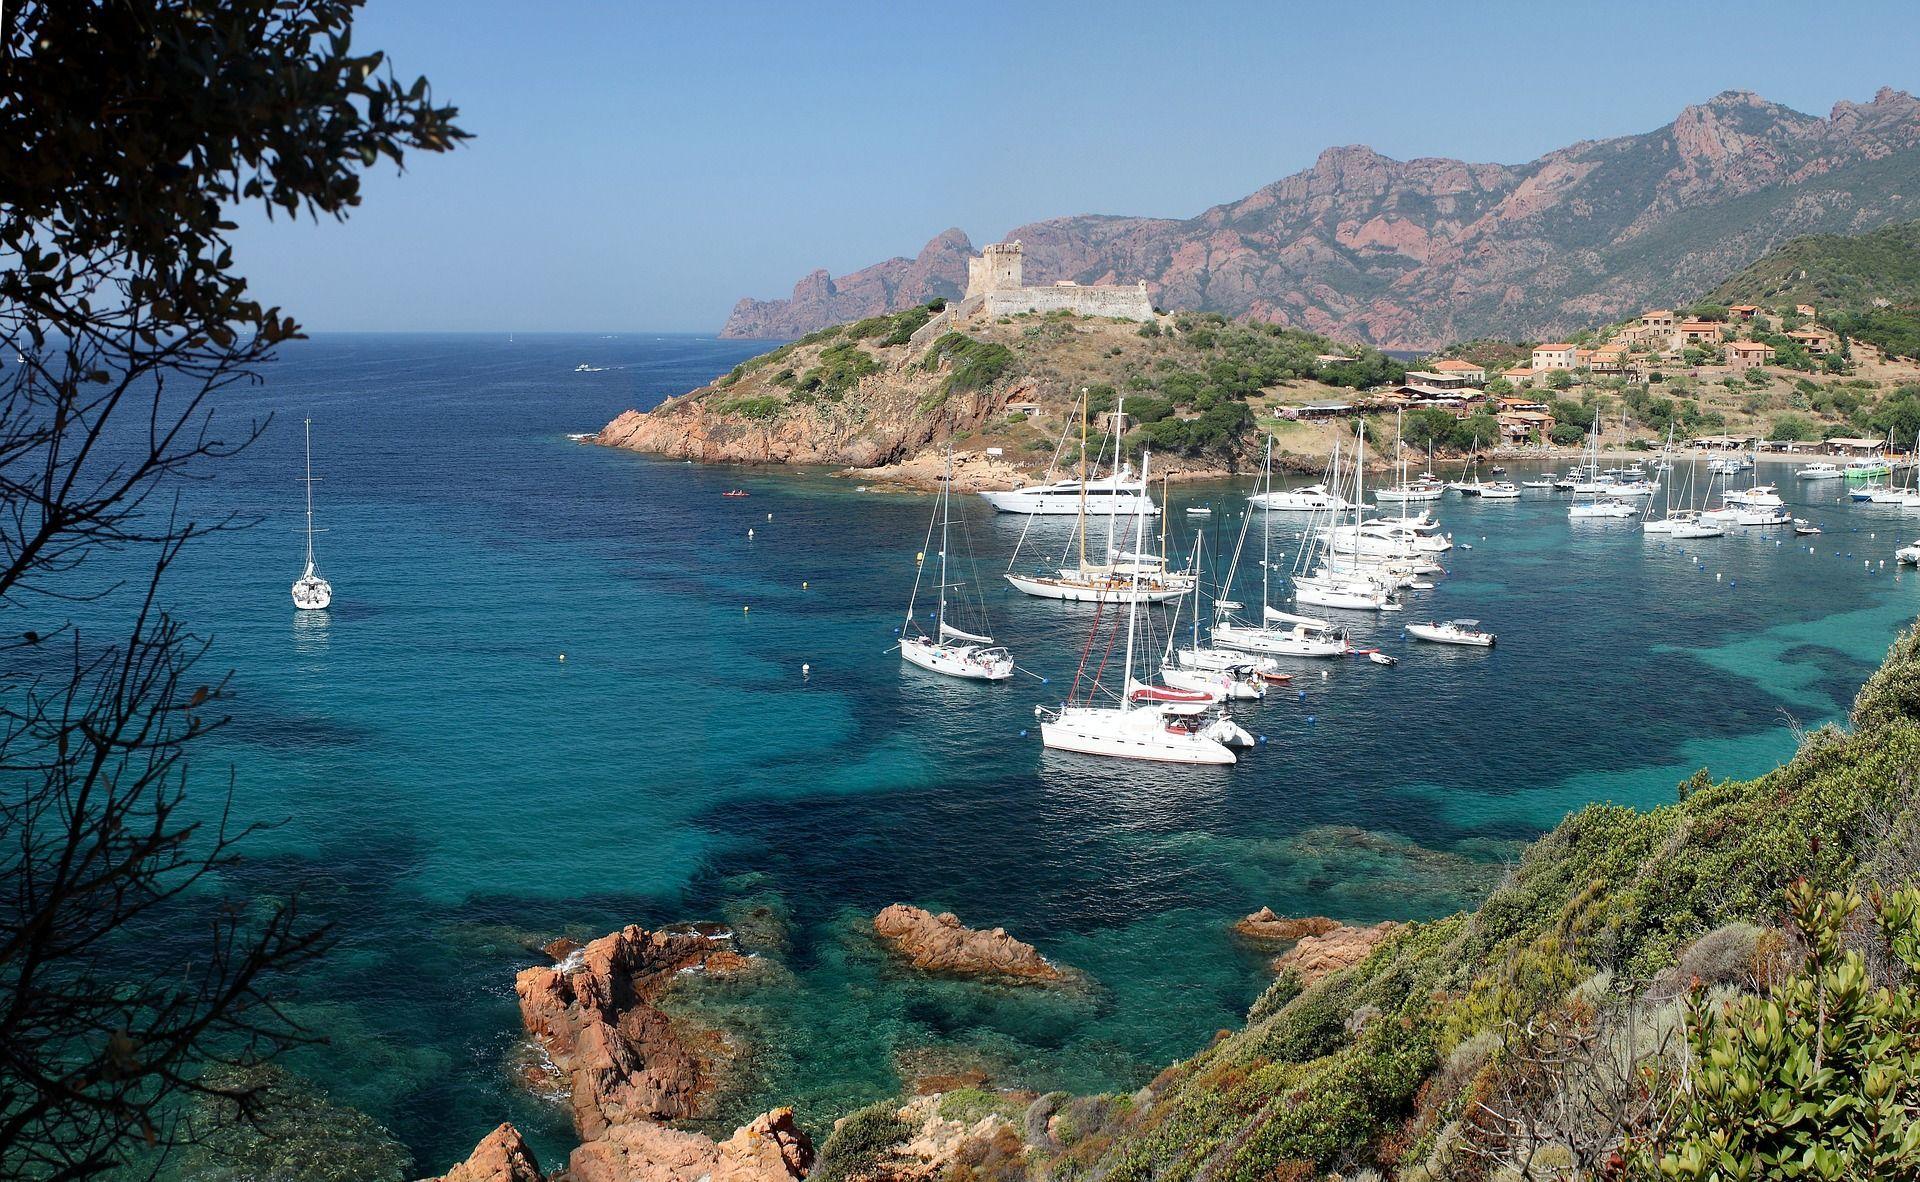 Corsica absolutely deserves the epithet “Isle of Beauty”. Enjoy a